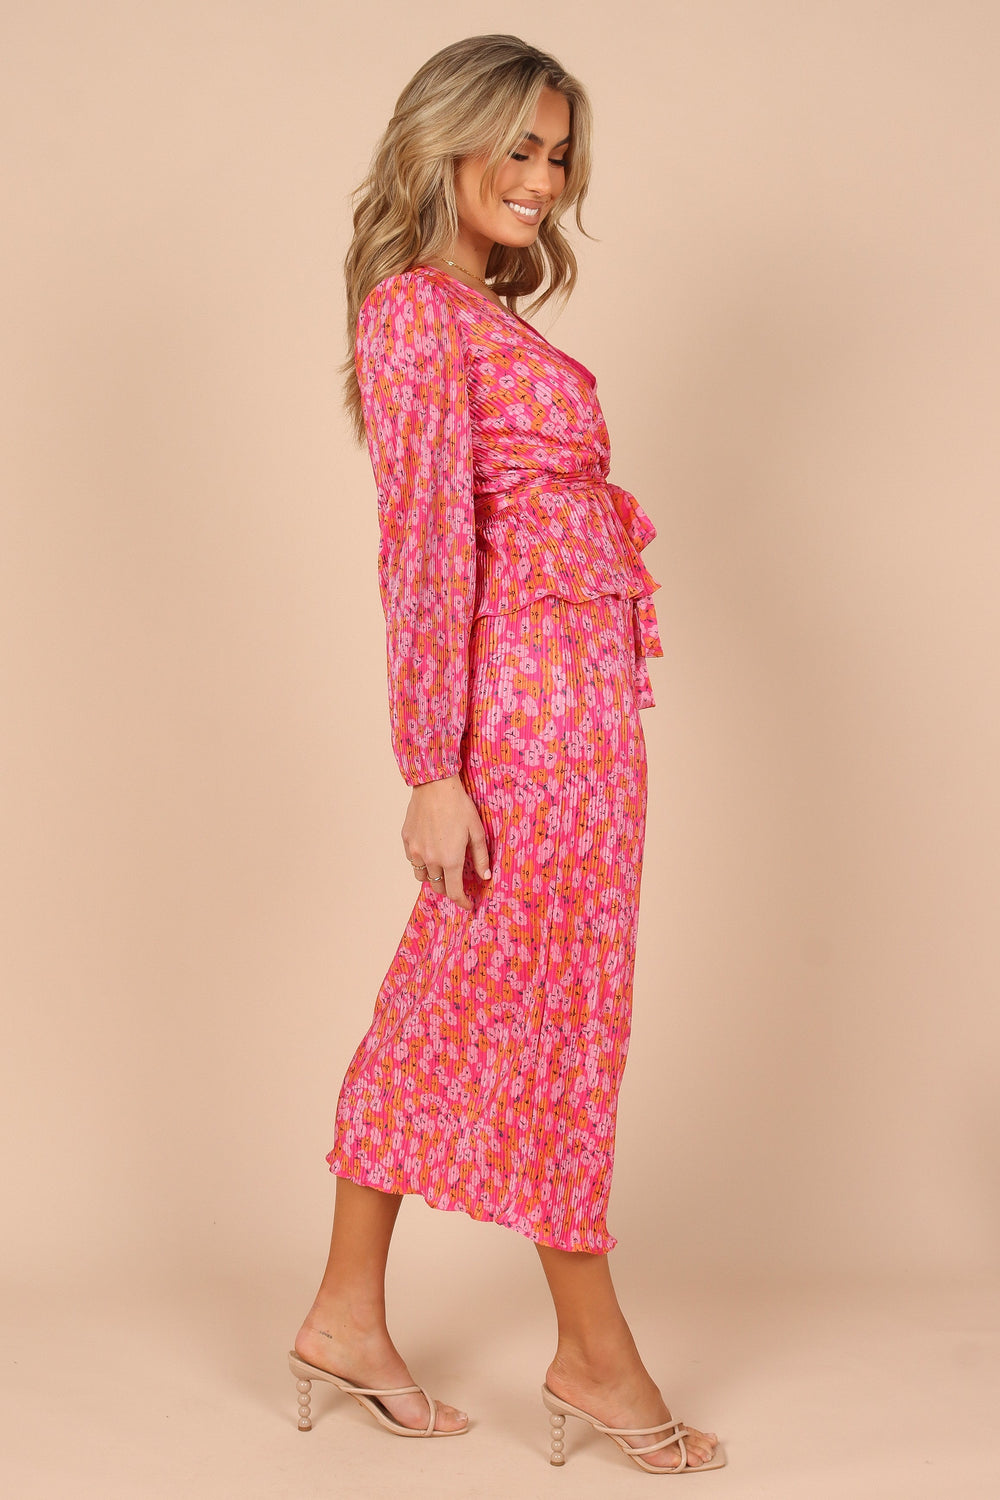 BOTTOMS @Minelli Pleat Midi Skirt - Hot Pink